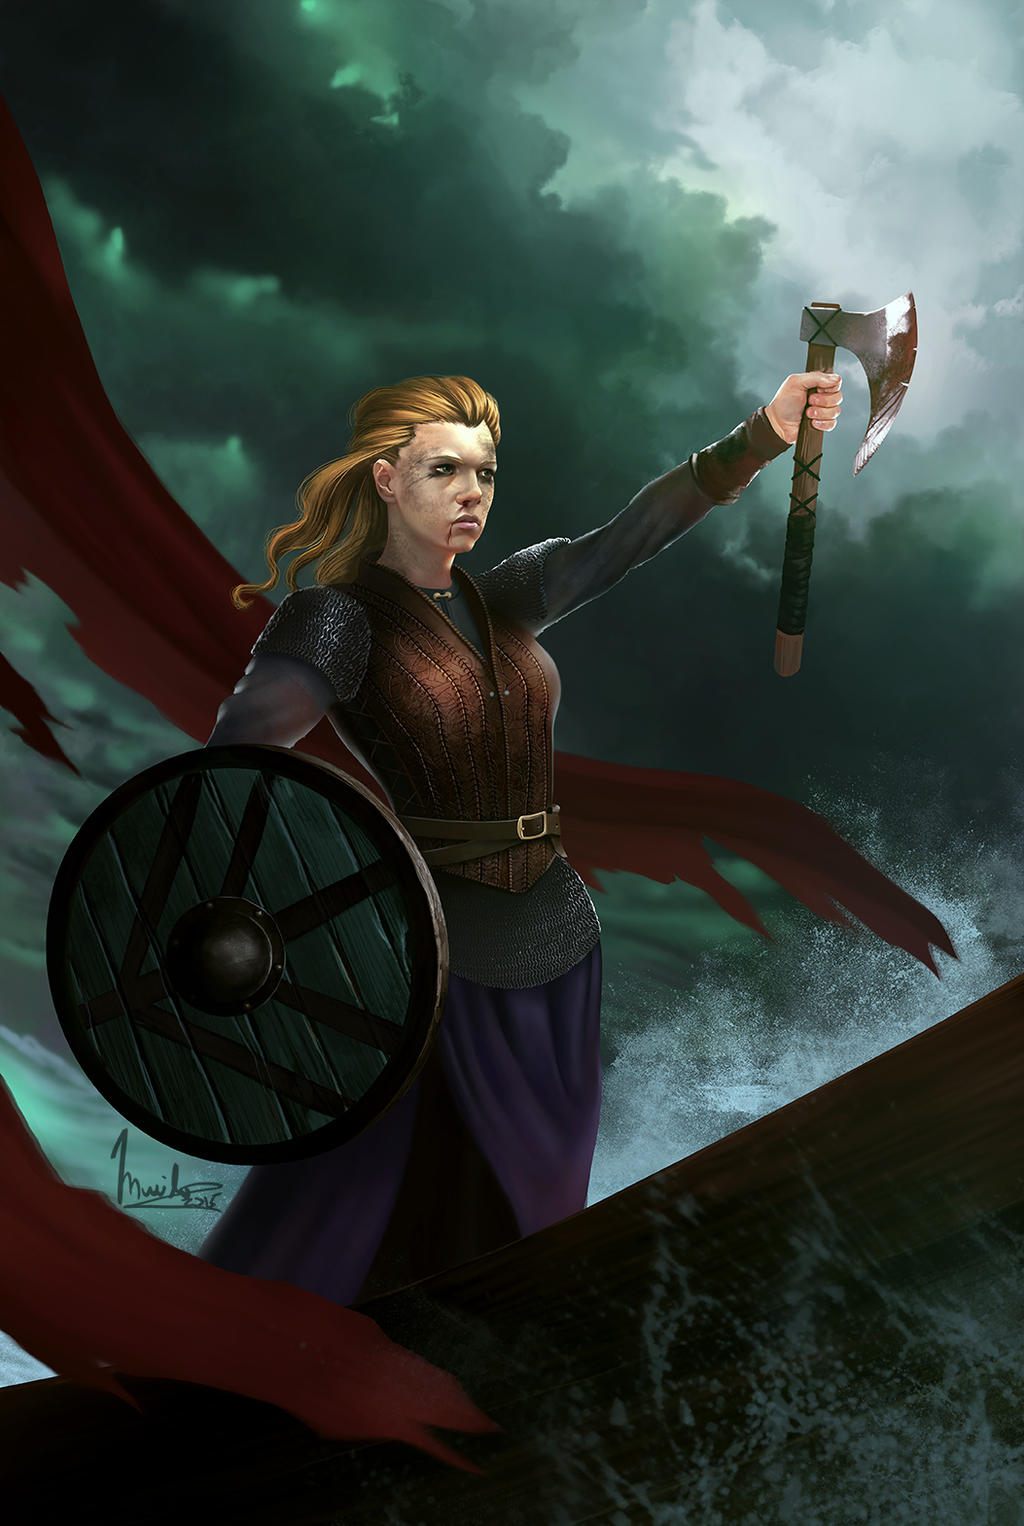 Viking Shieldmaiden by JoelChaimHoltzman on DeviantArt